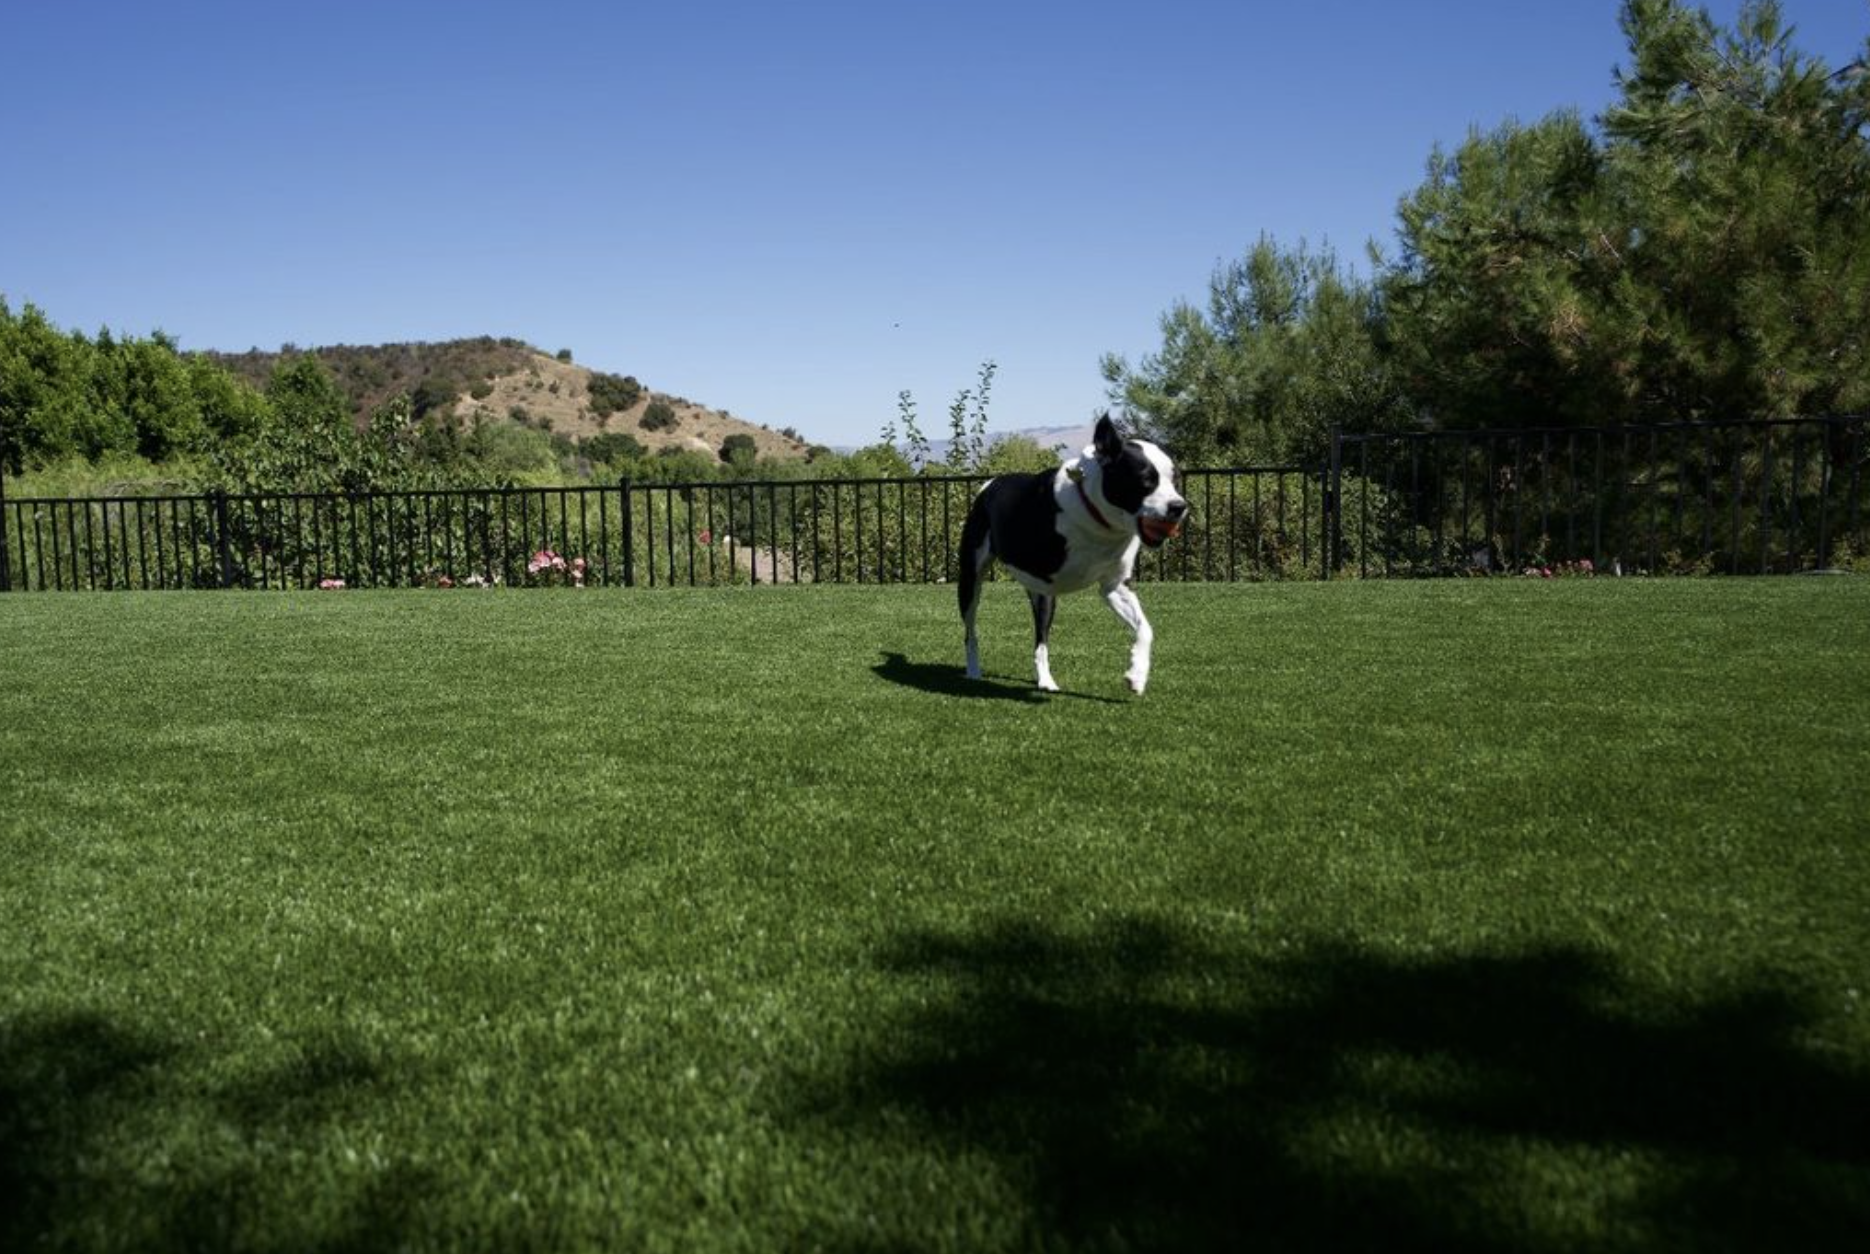 Dog walking on artificial grass.